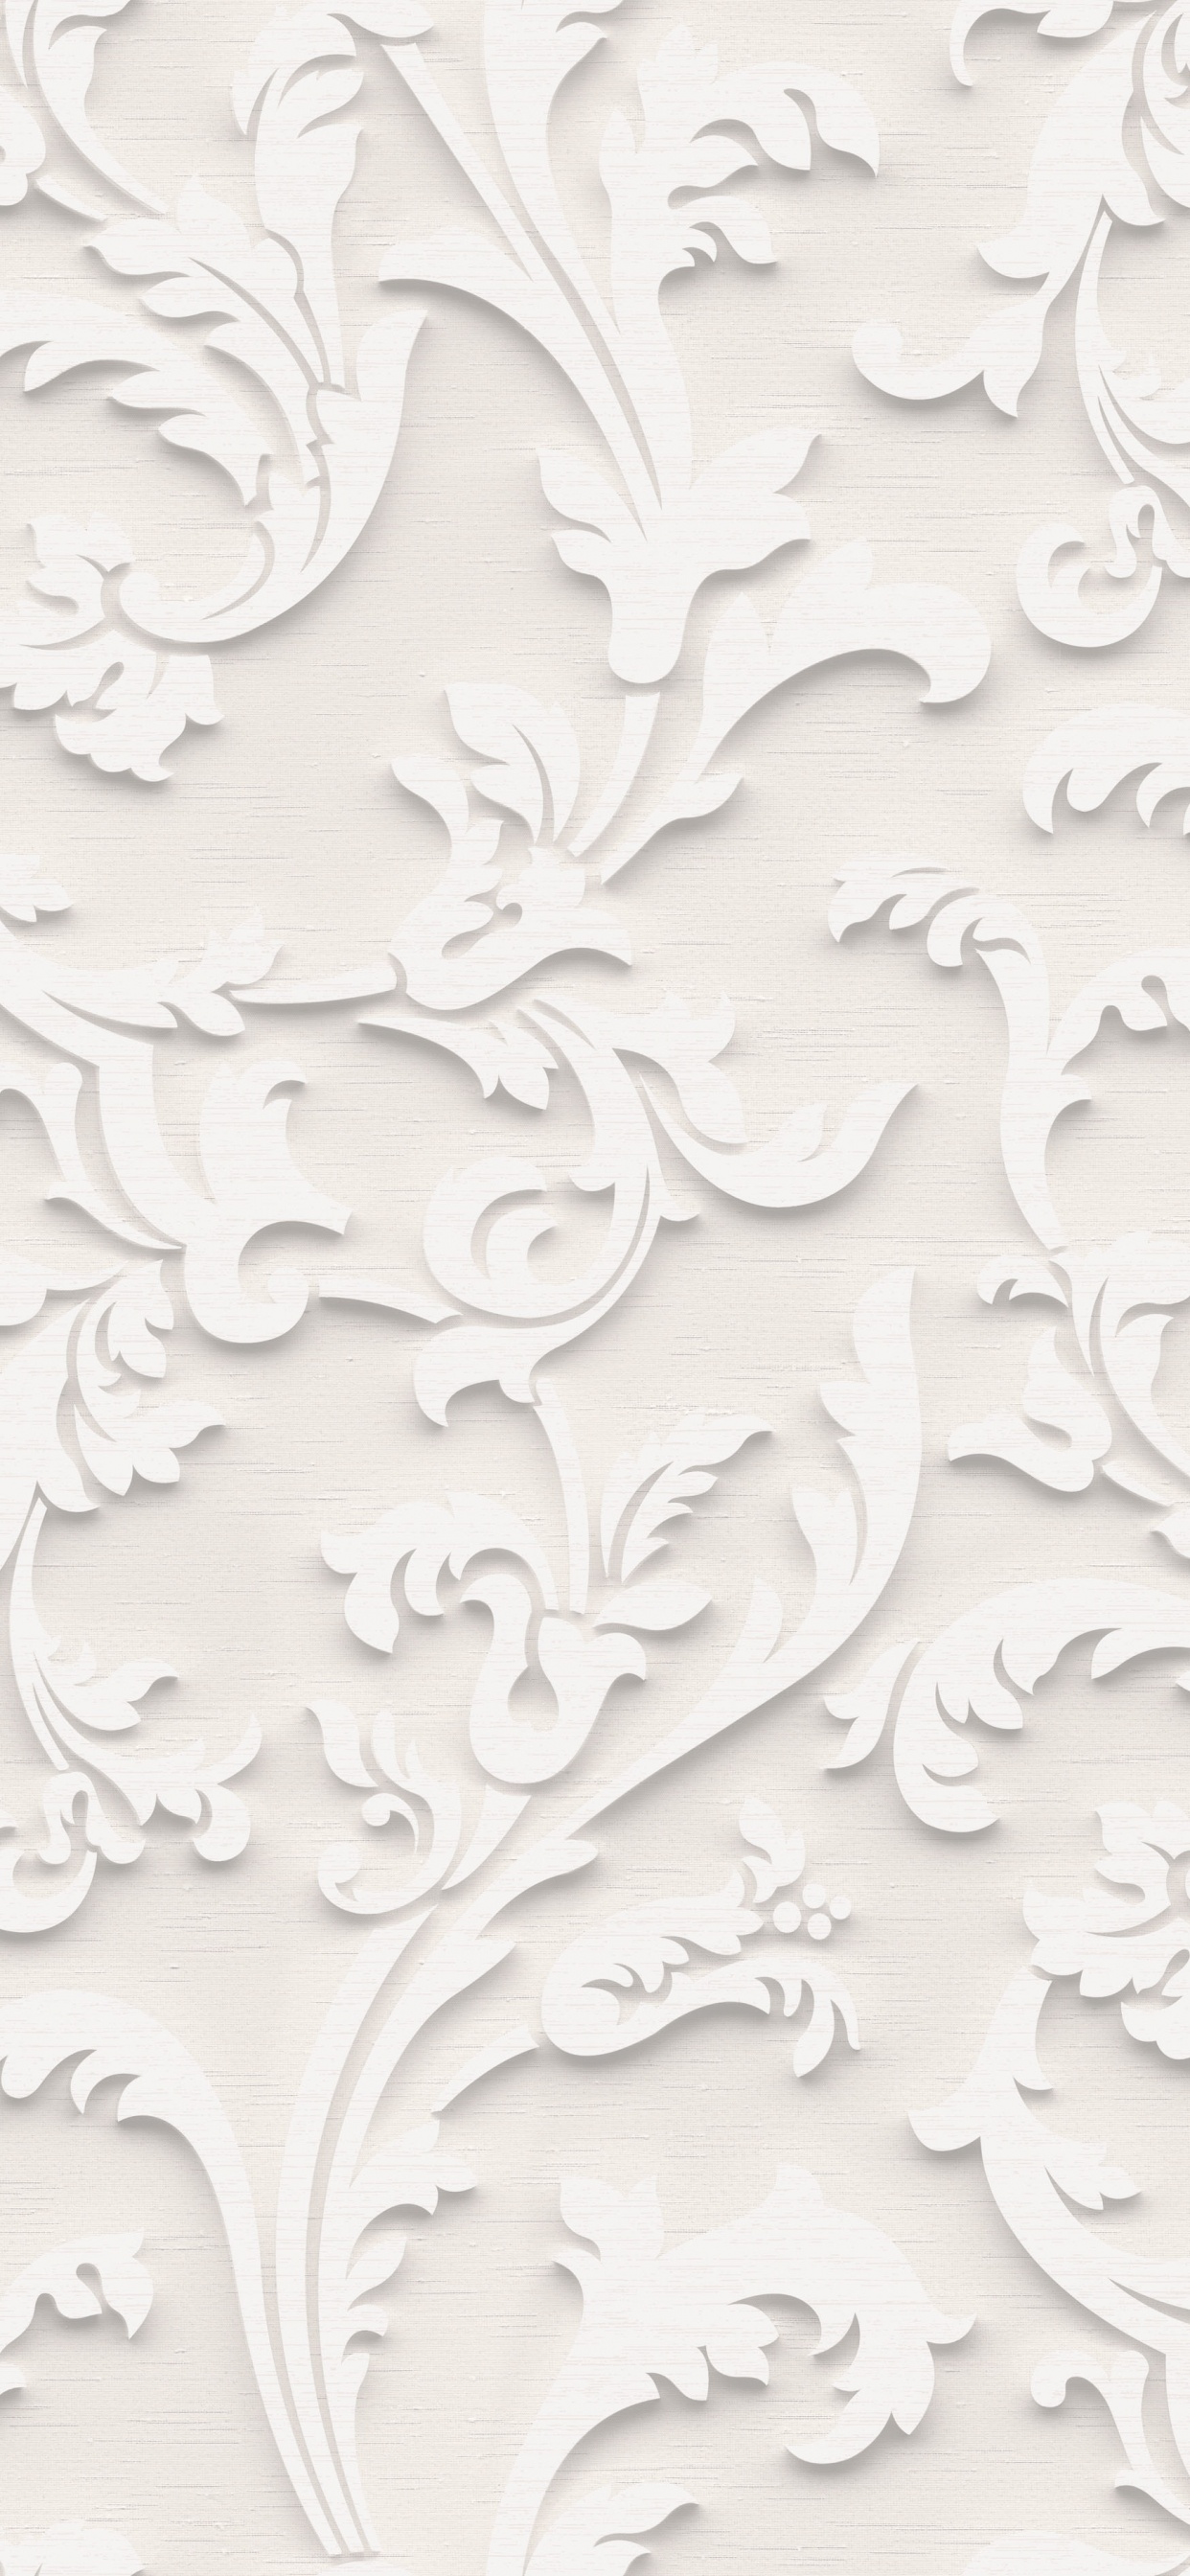 Textil Floral Blanco y Gris. Wallpaper in 1242x2688 Resolution